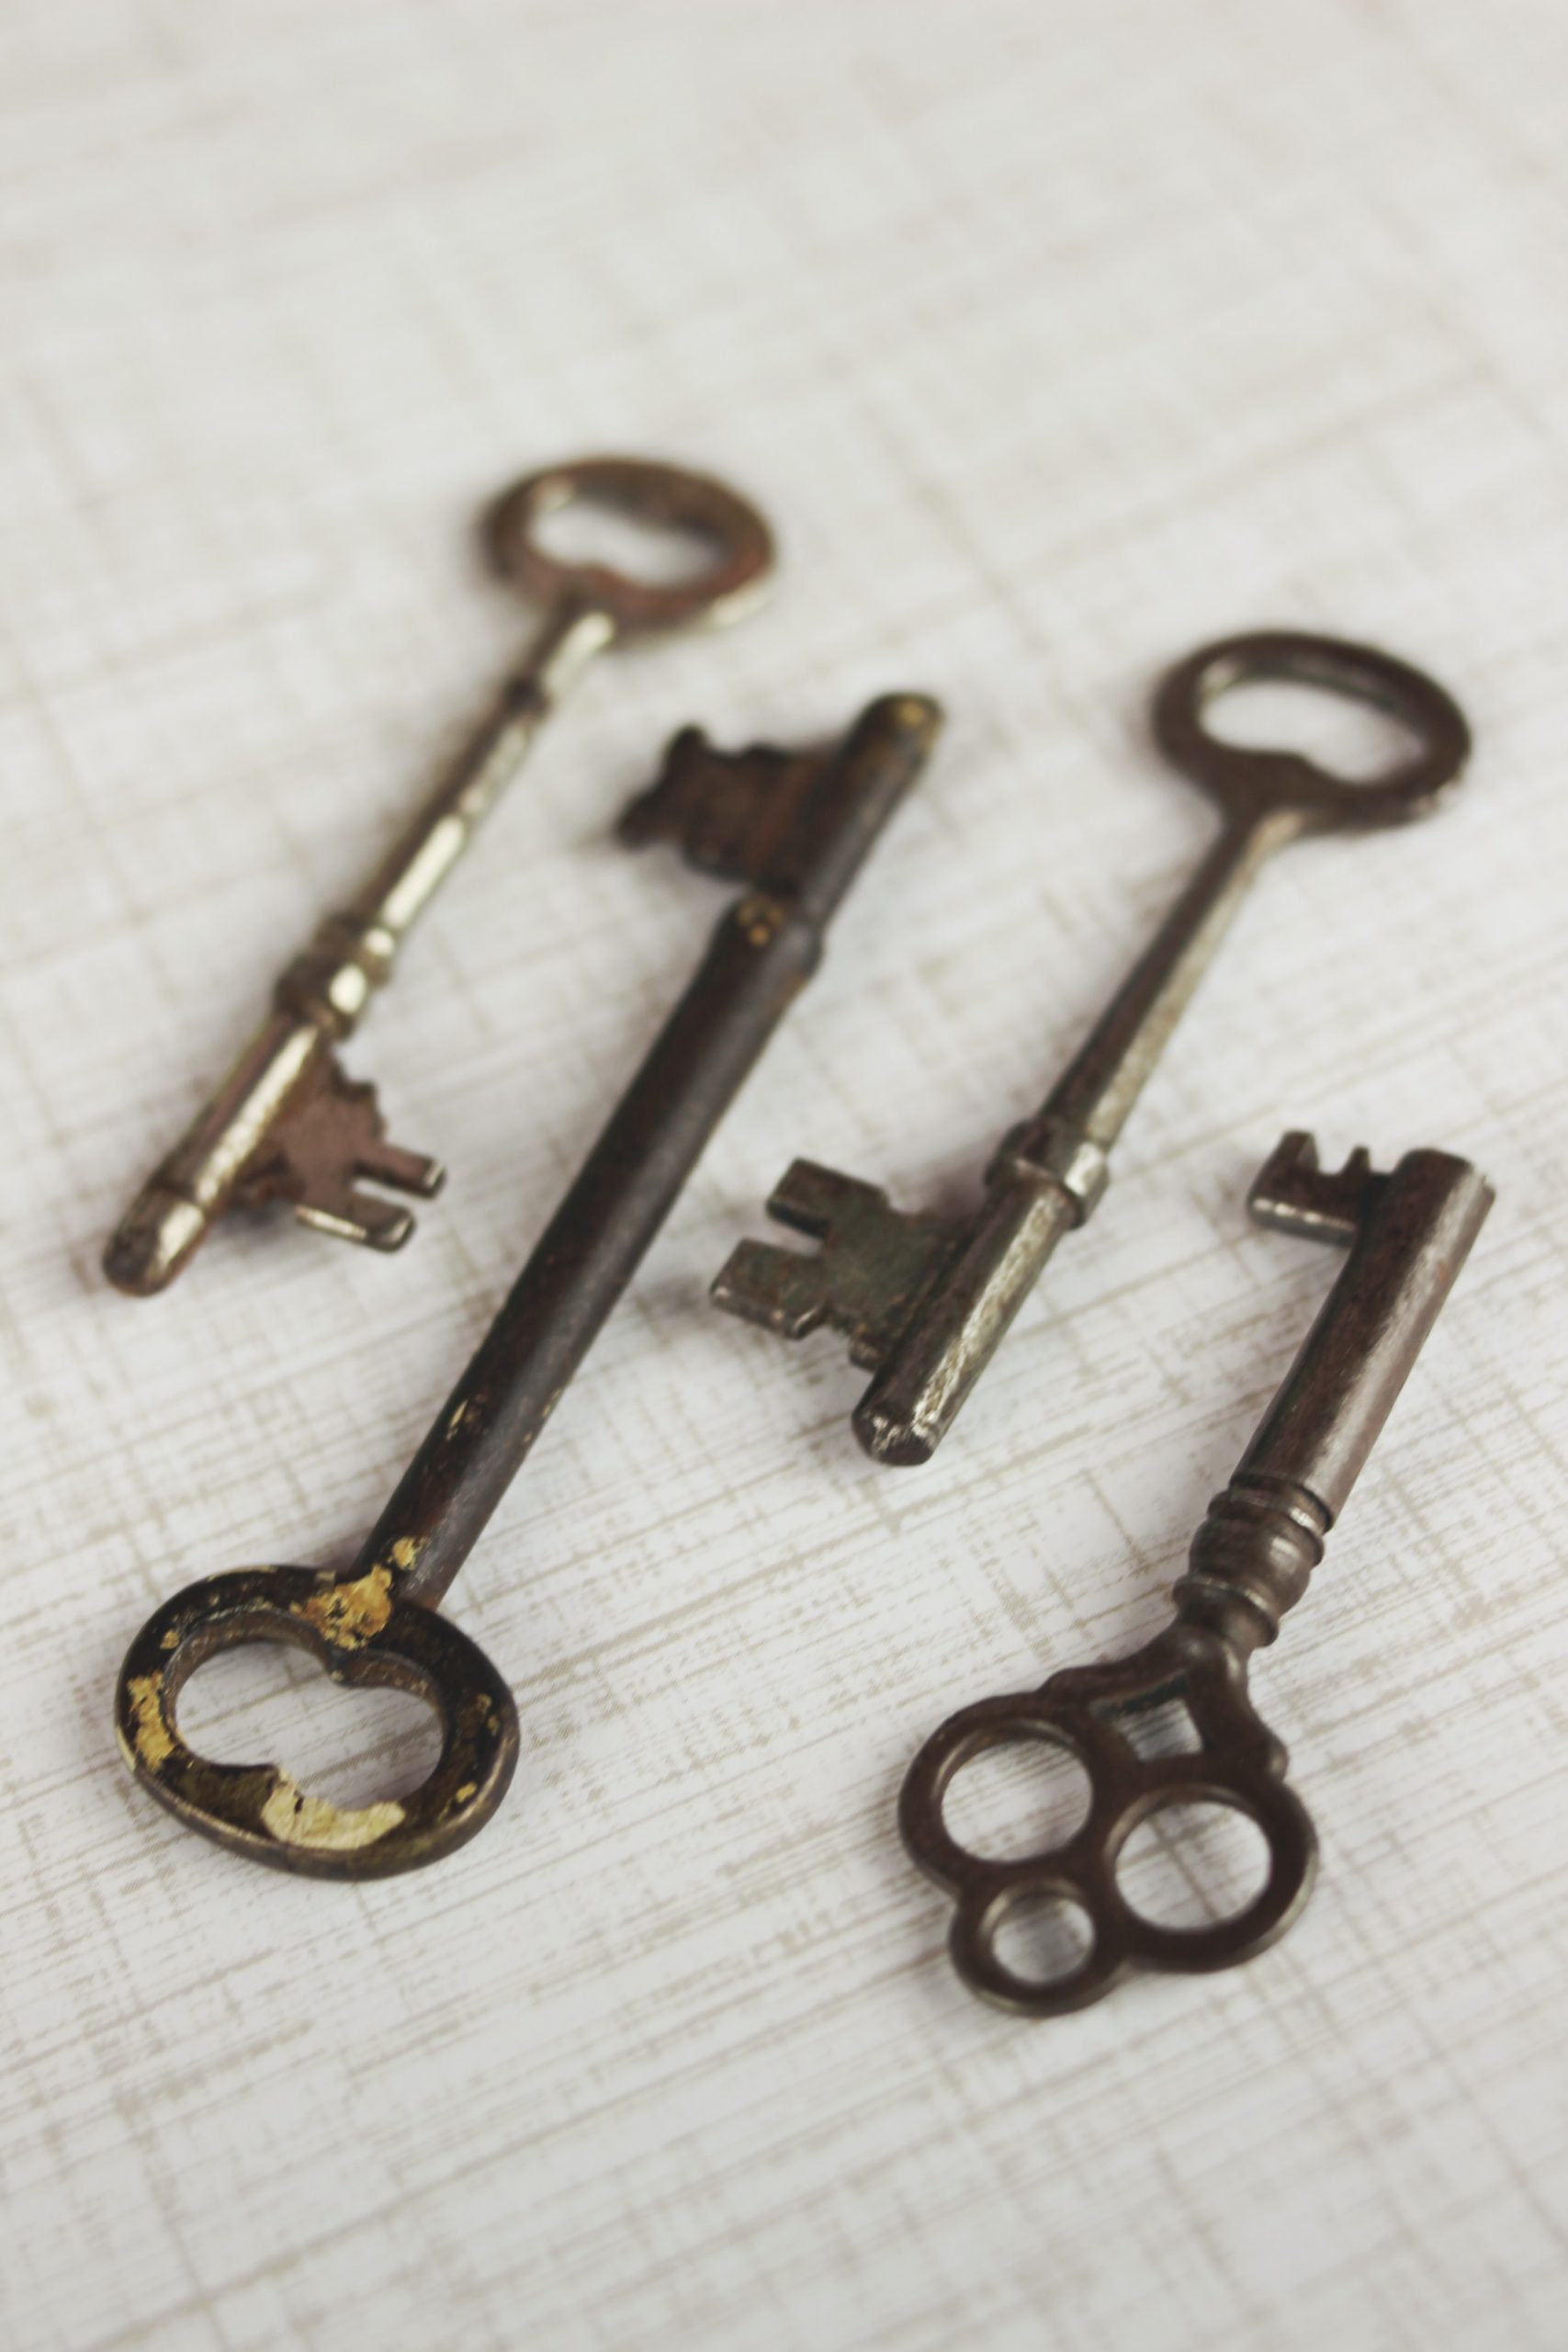 Old Brass Keys